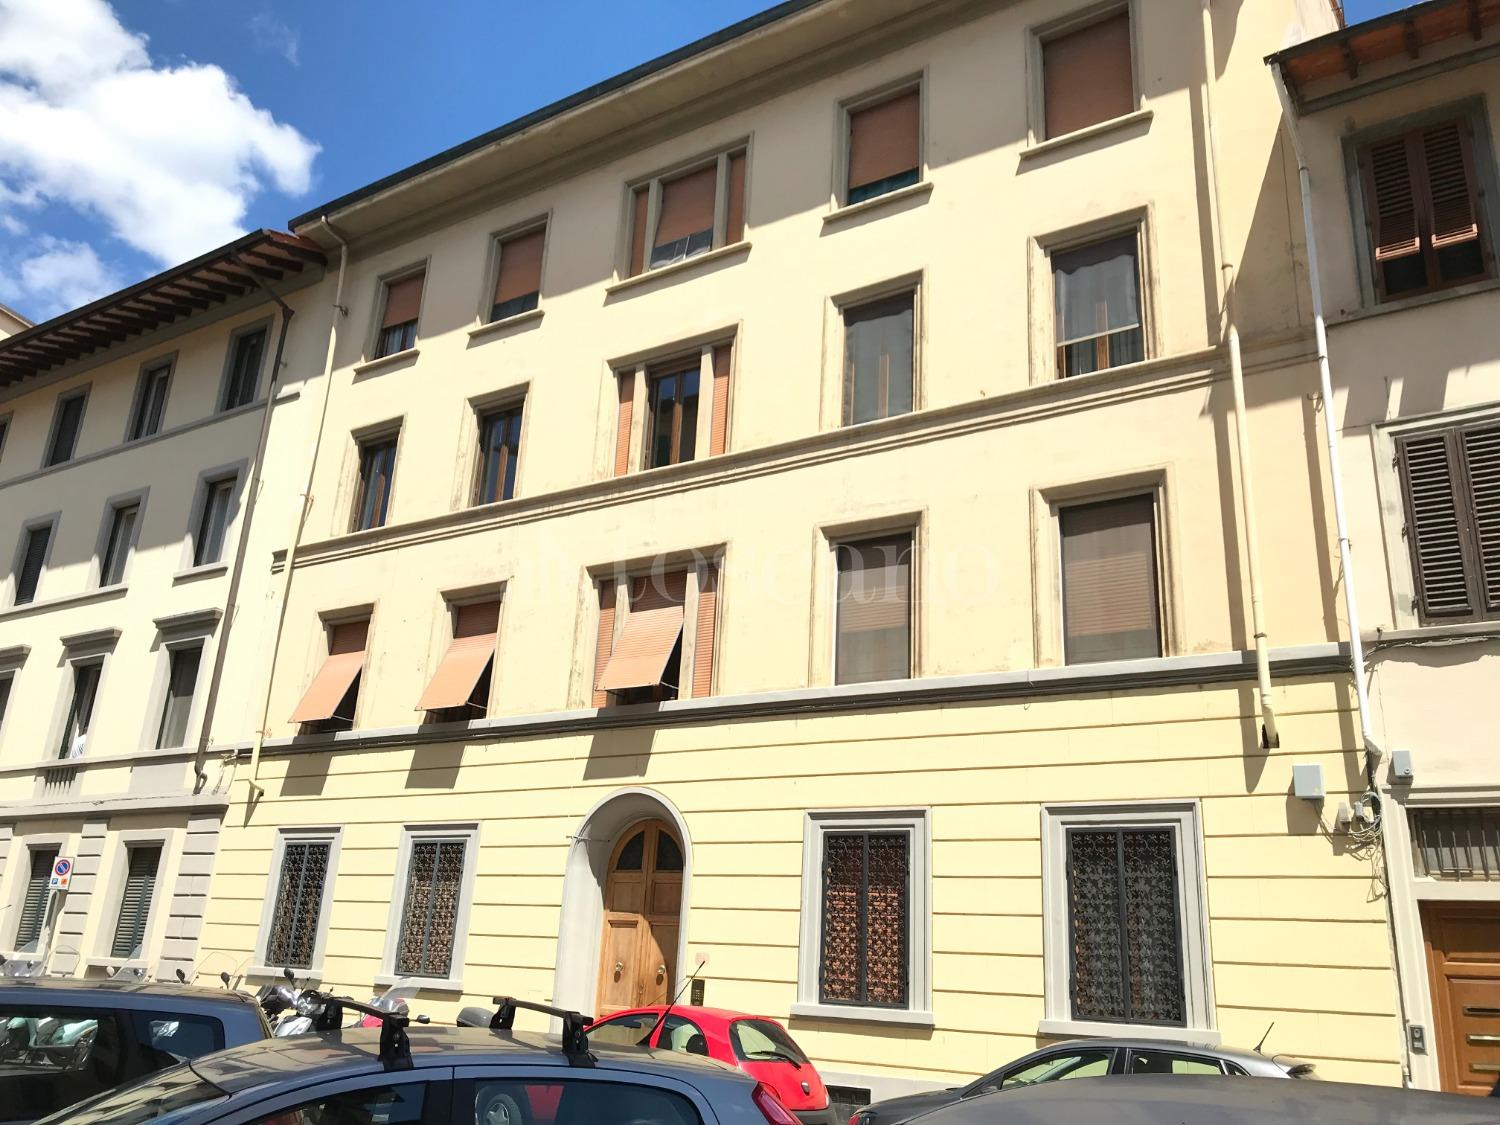 Vendita Casa A Firenze In Via Petrella Mercadante 8 2019 Toscano